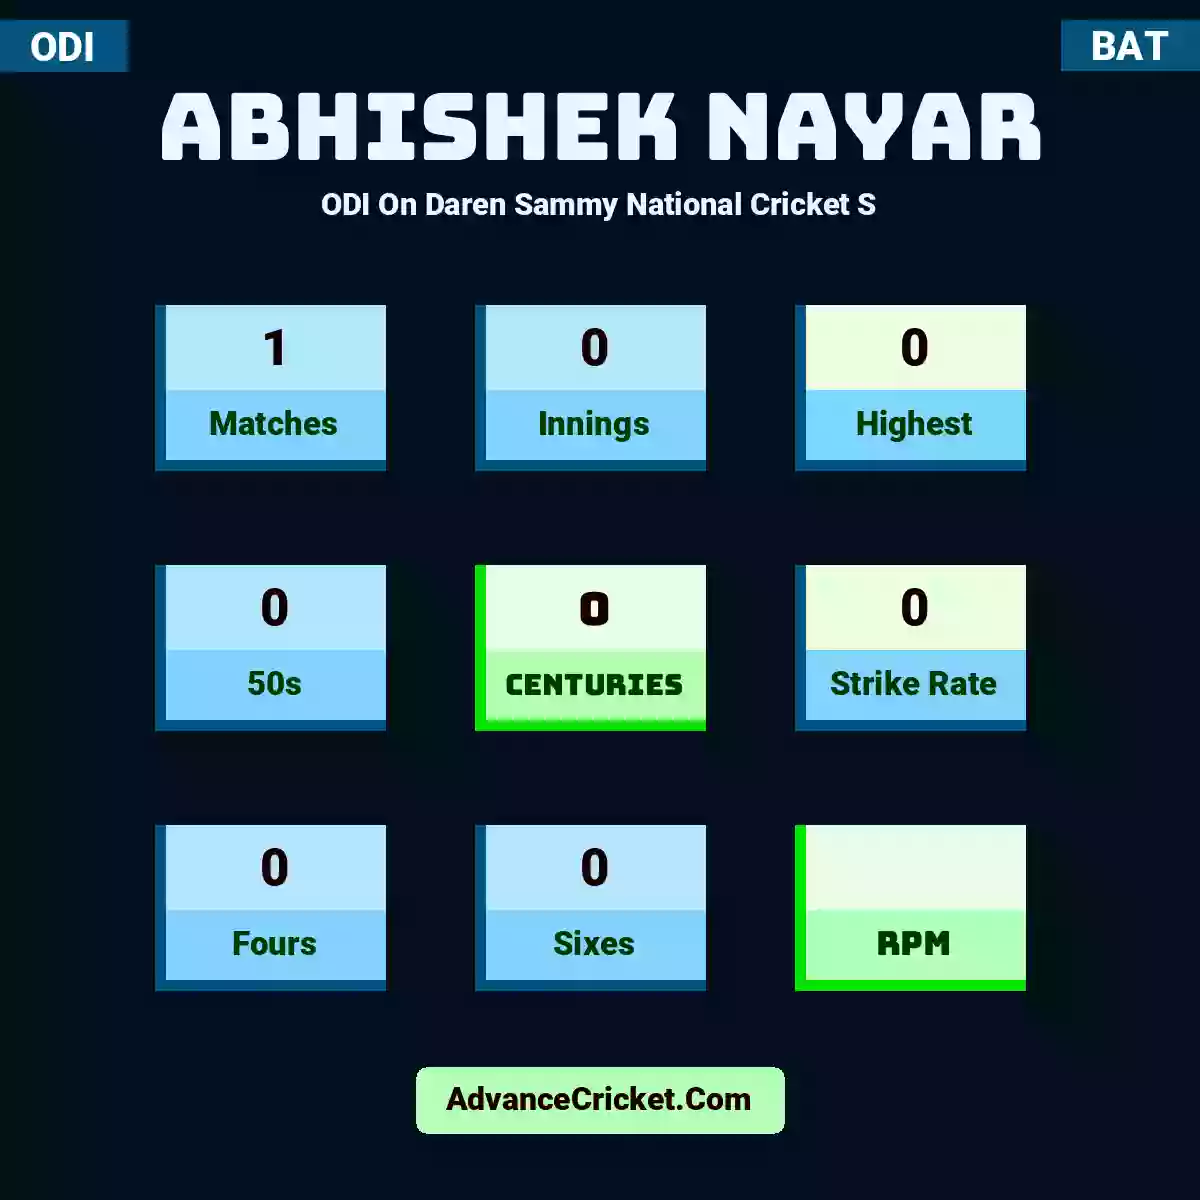 Abhishek Nayar ODI  On Daren Sammy National Cricket S, Abhishek Nayar played 1 matches, scored 0 runs as highest, 0 half-centuries, and 0 centuries, with a strike rate of 0. A.Nayar hit 0 fours and 0 sixes.